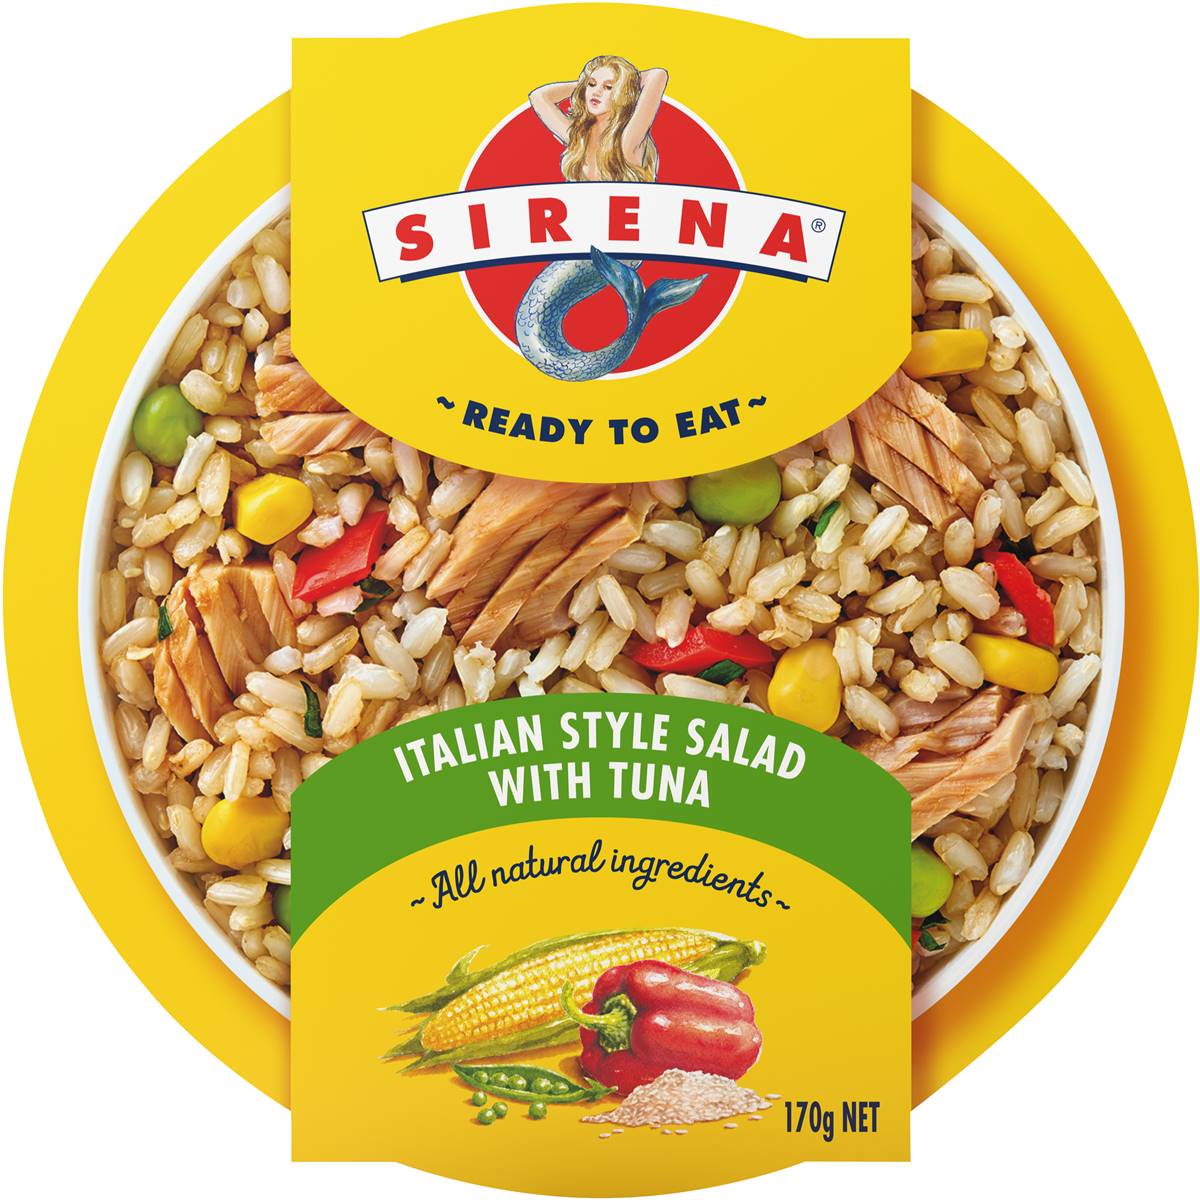 Sirena Ready to Eat - Italian Style Salad with Tuna 170g